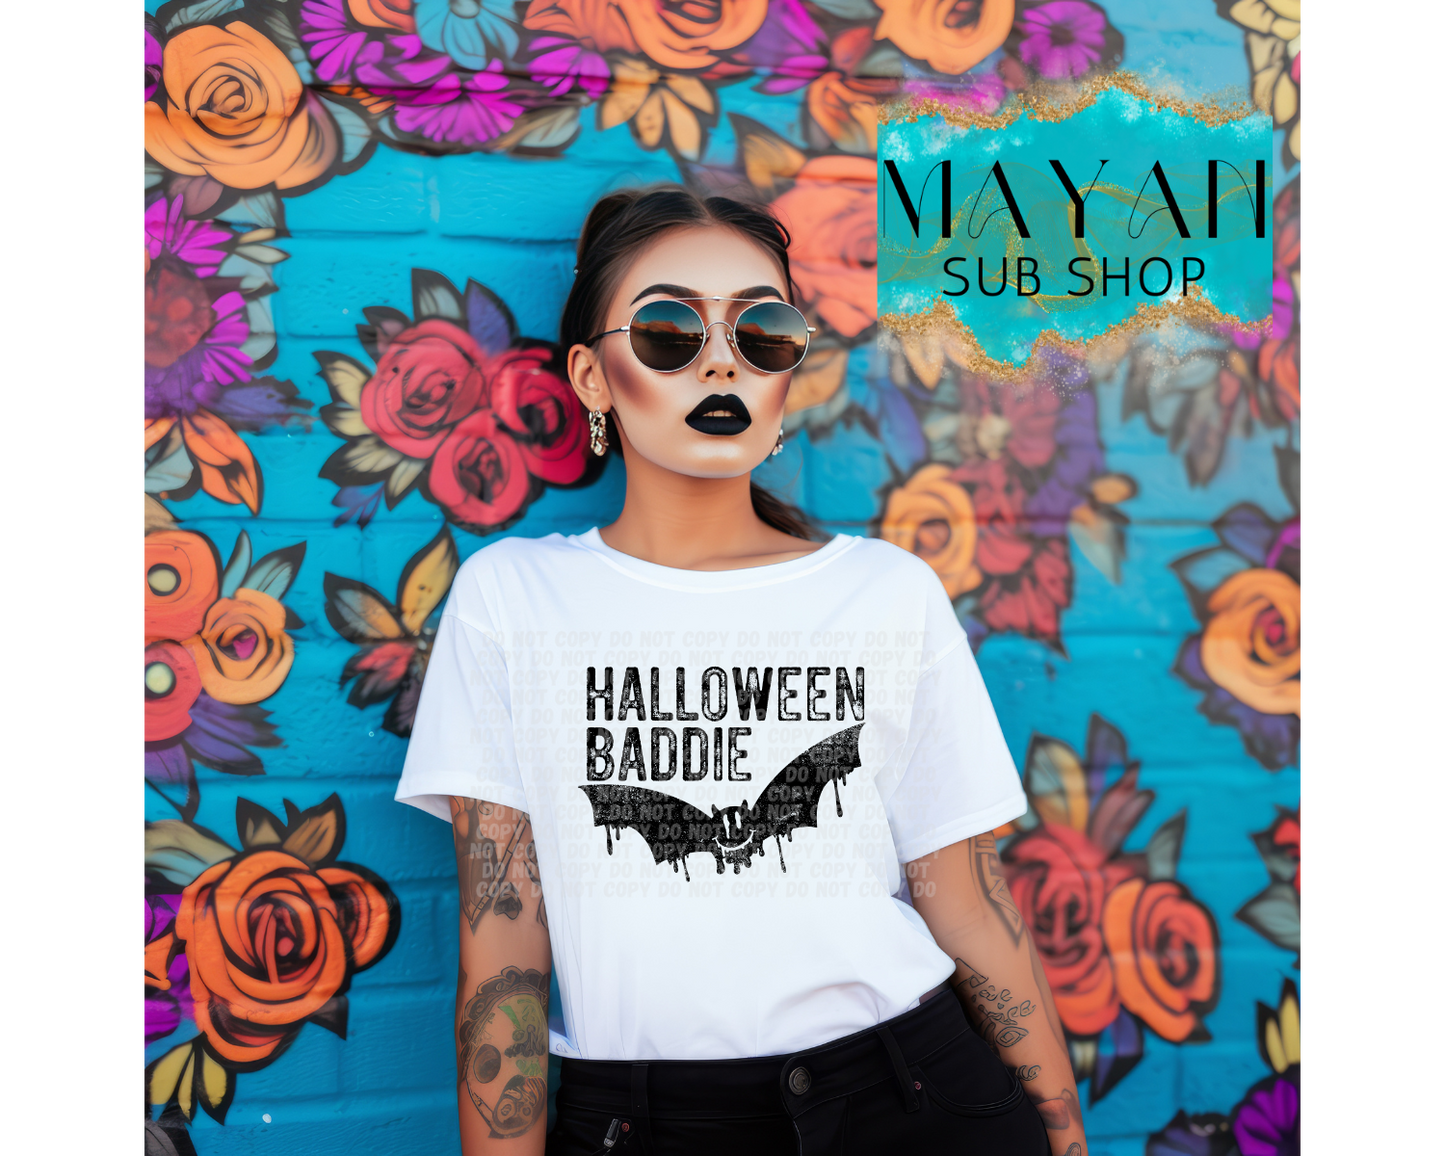 Halloween Baddie shirt. -Mayan Sub Shop